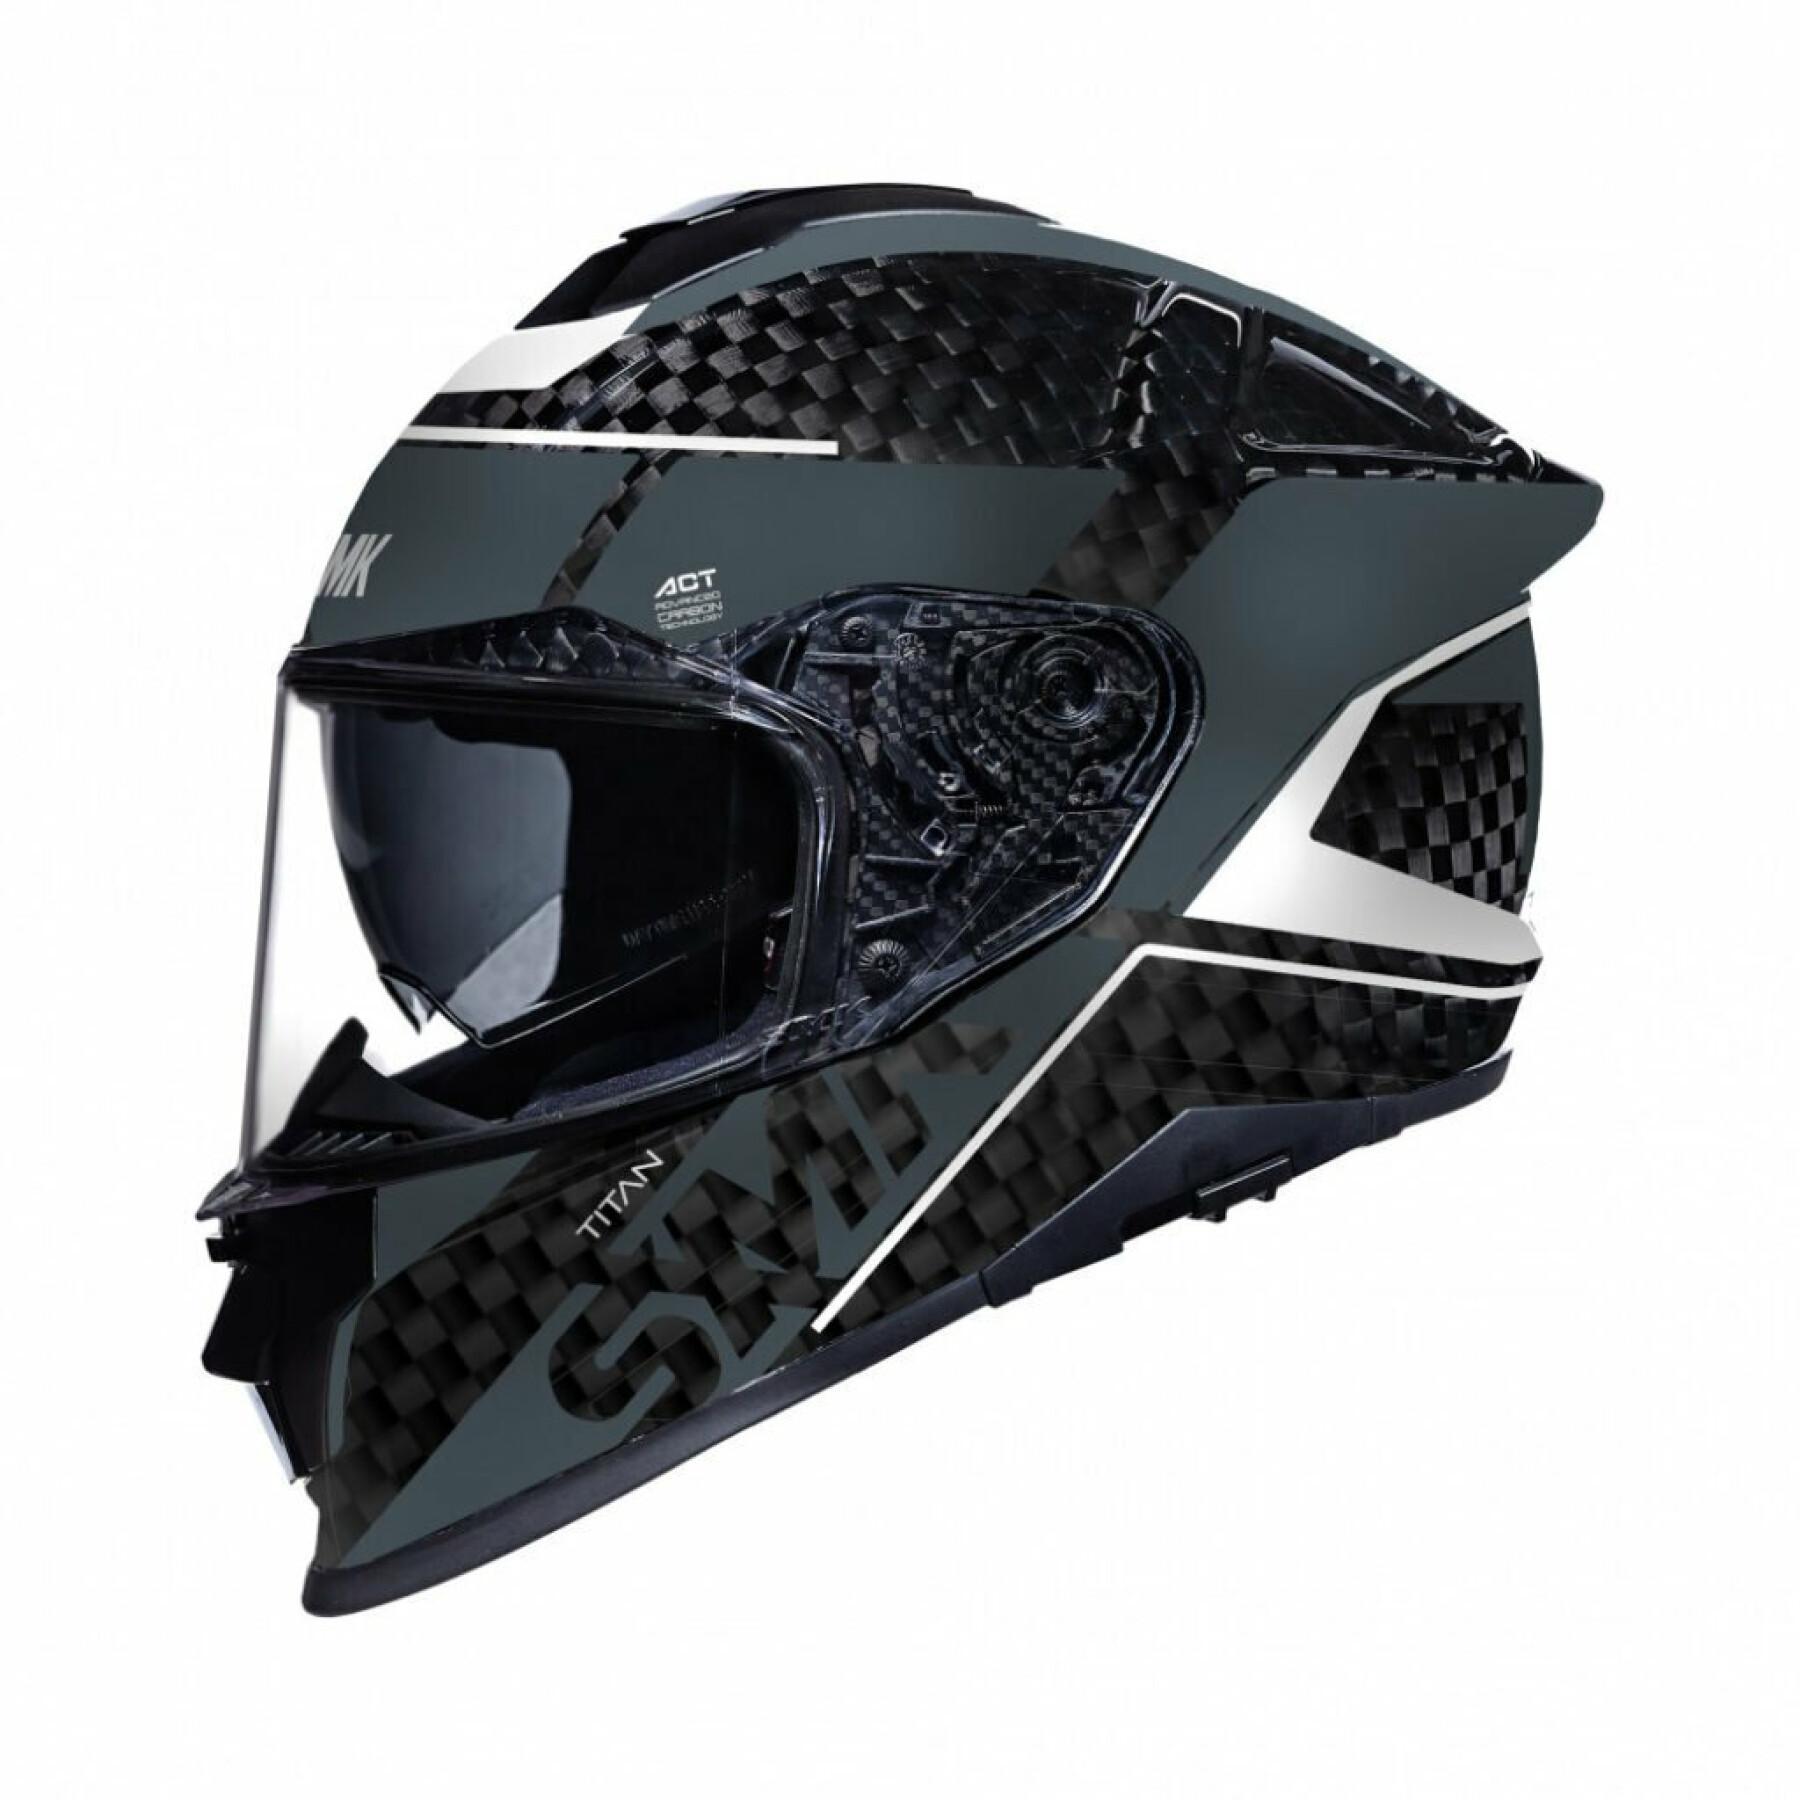 Motorrad-Integralhelm SMK titan carbon nero